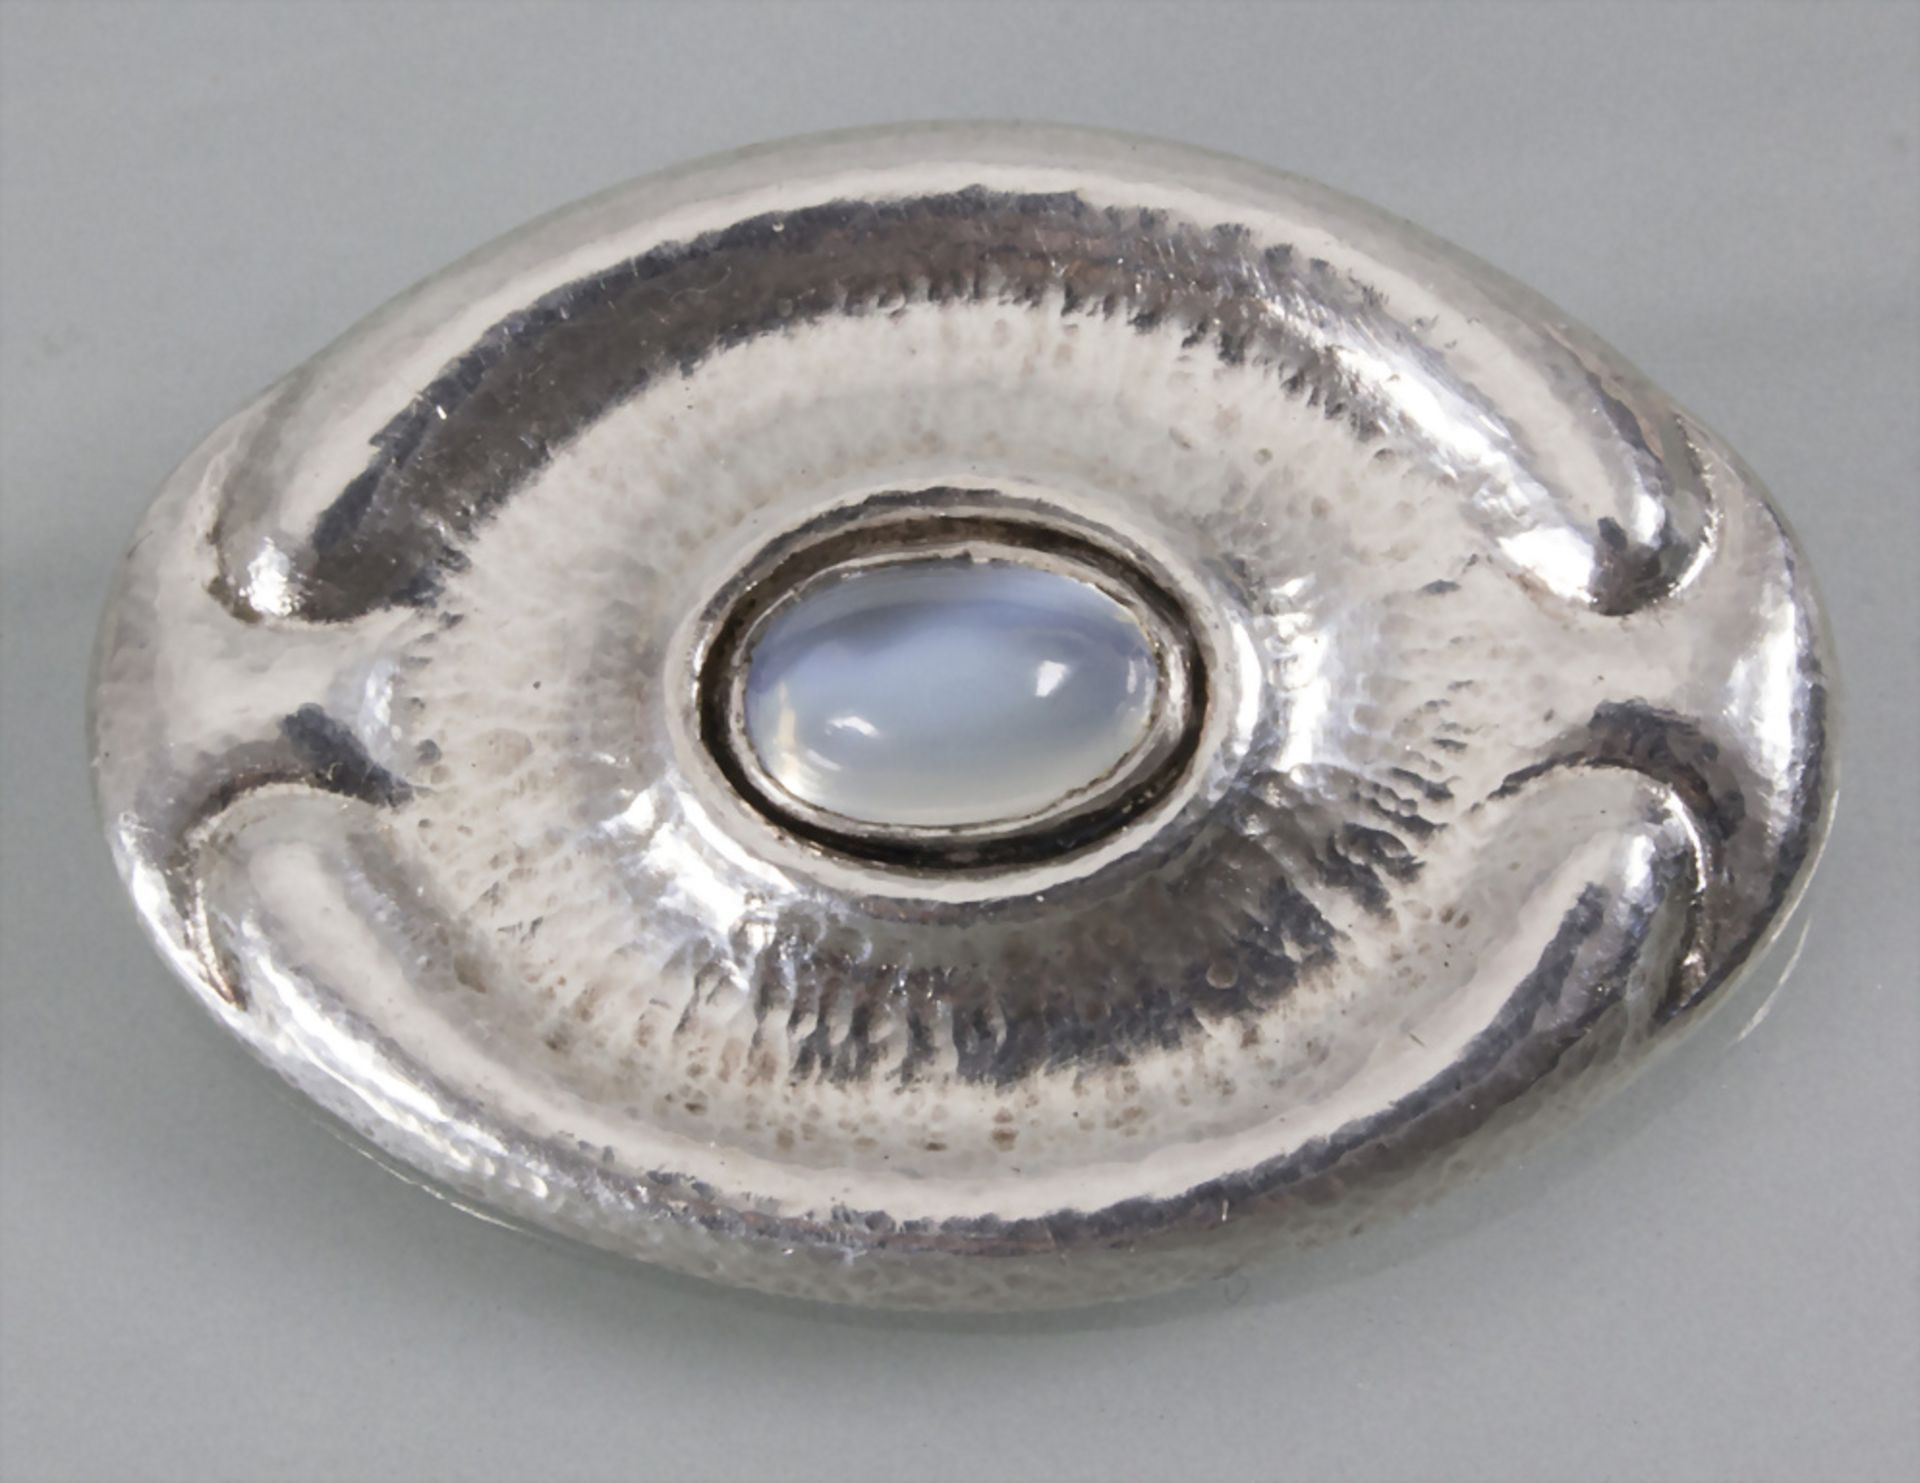 Jugendstil Brosche mit Mondstein / An Art Nouveau silver brooch with moonstone cabochon, wohl ...